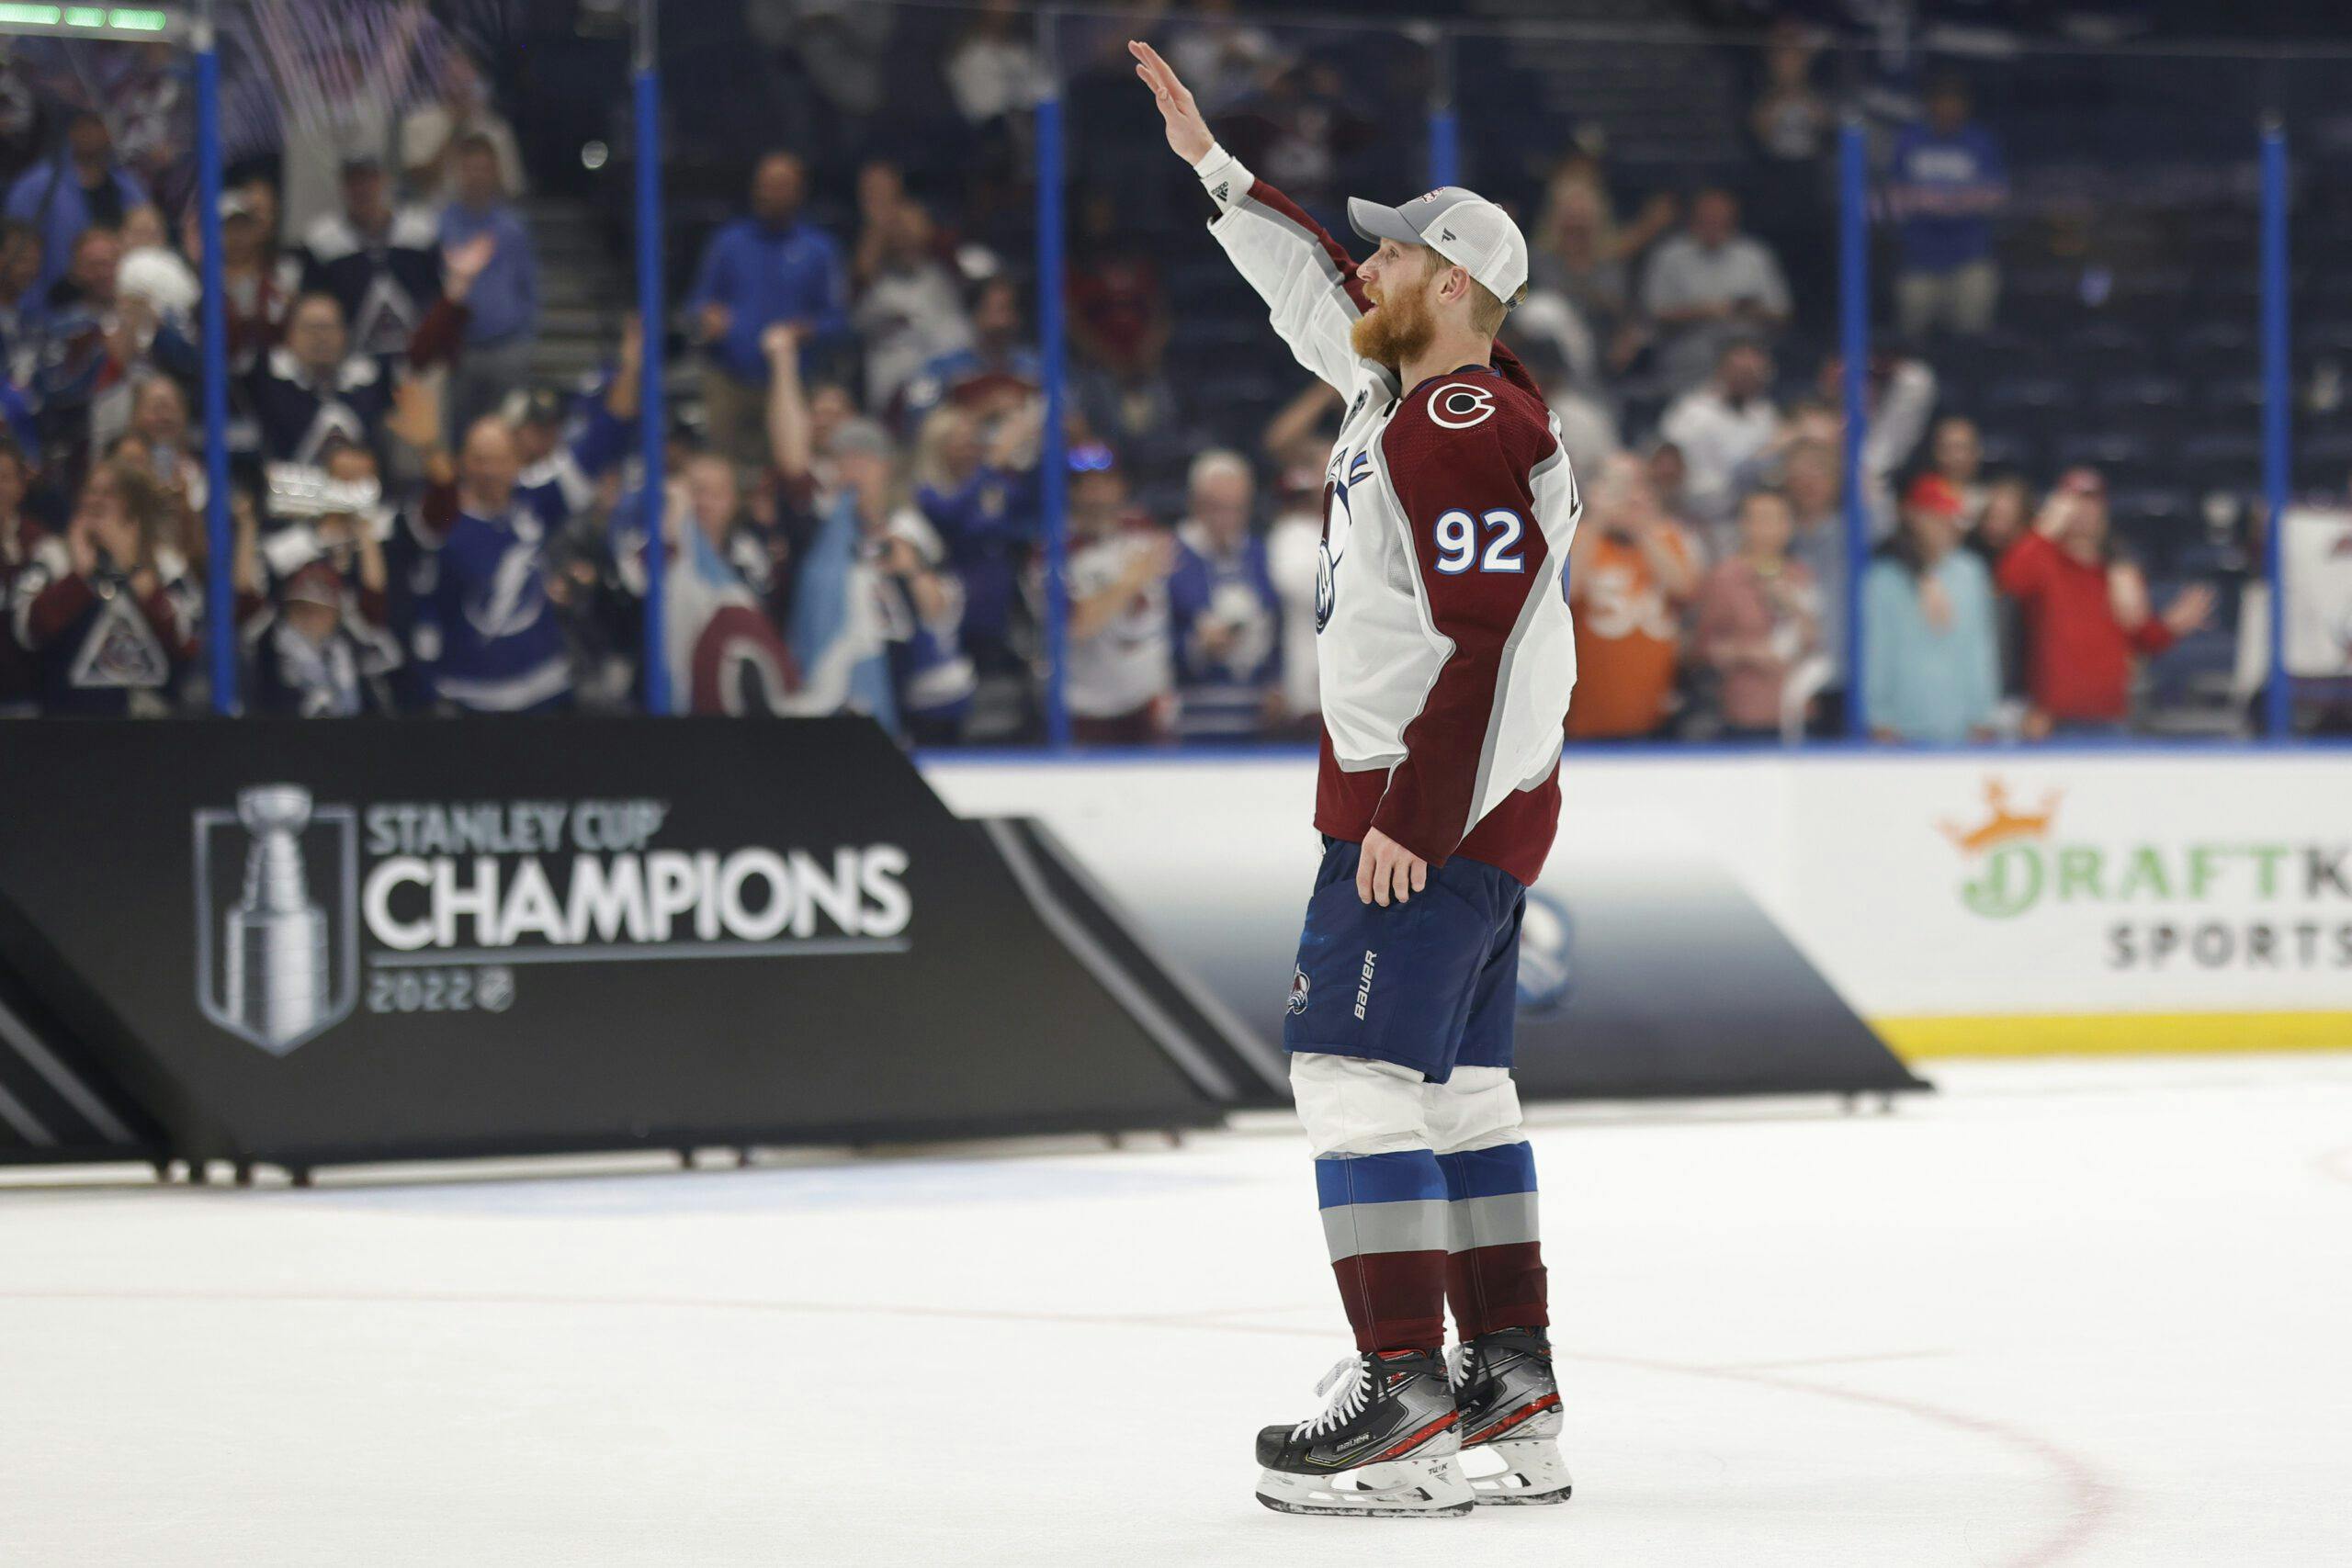 ‘Mentally, I felt really close’: Avalanche’s Gabriel Landeskog focusing on NHL return